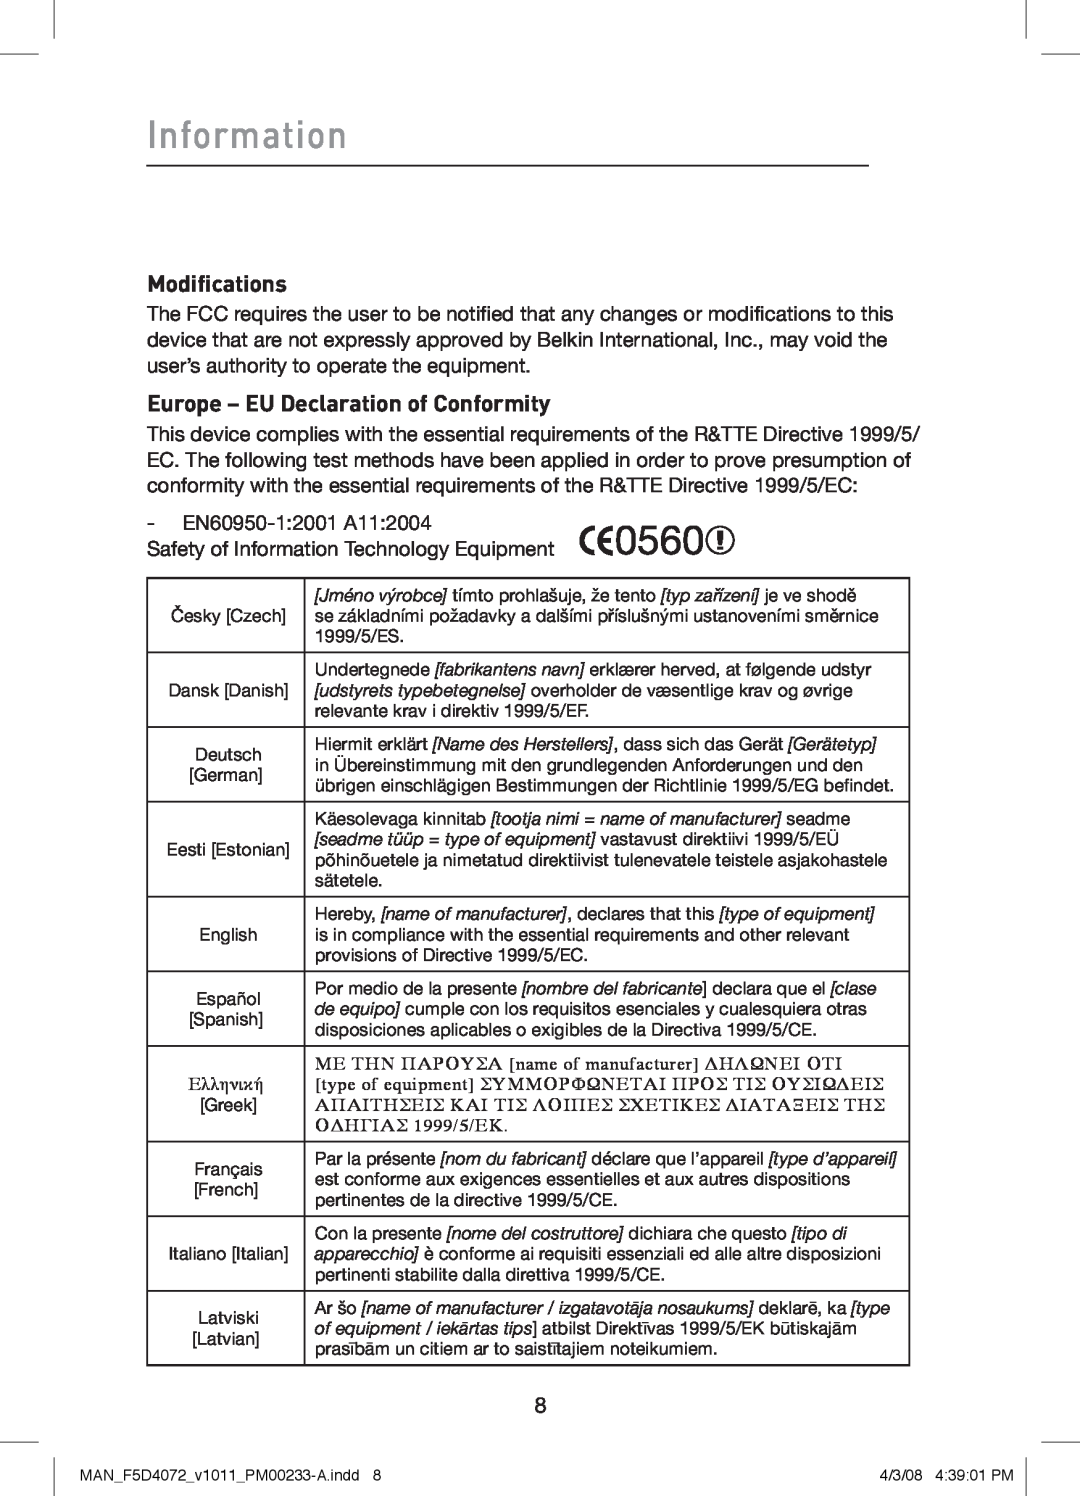 Belkin F5D4072 user manual Information, Modifications, Europe - EU Declaration of Conformity 